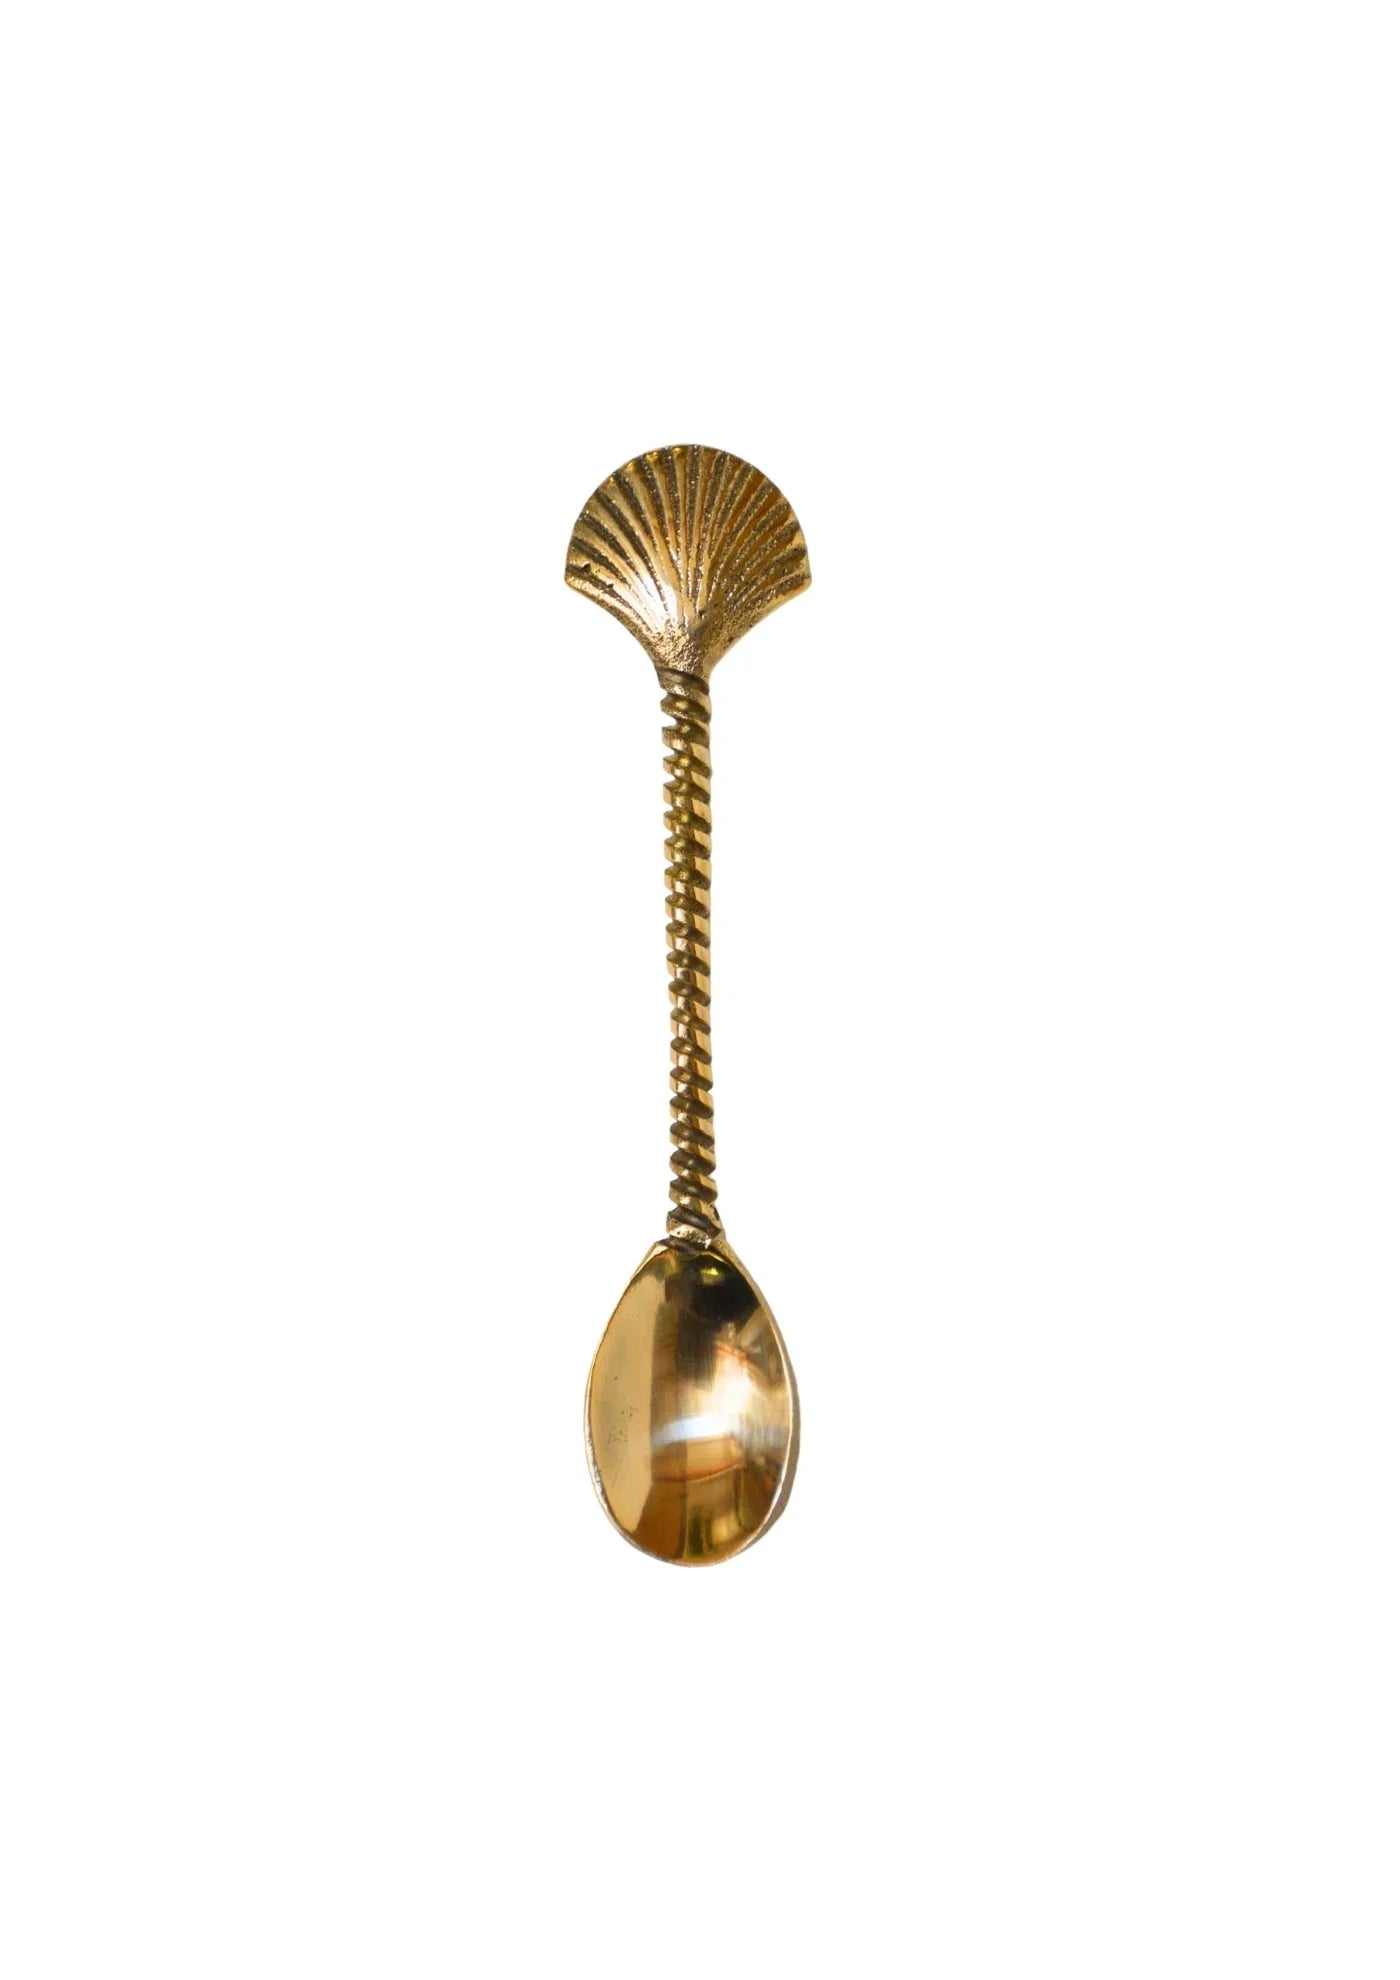 Shell Brass Spoon Set of 4